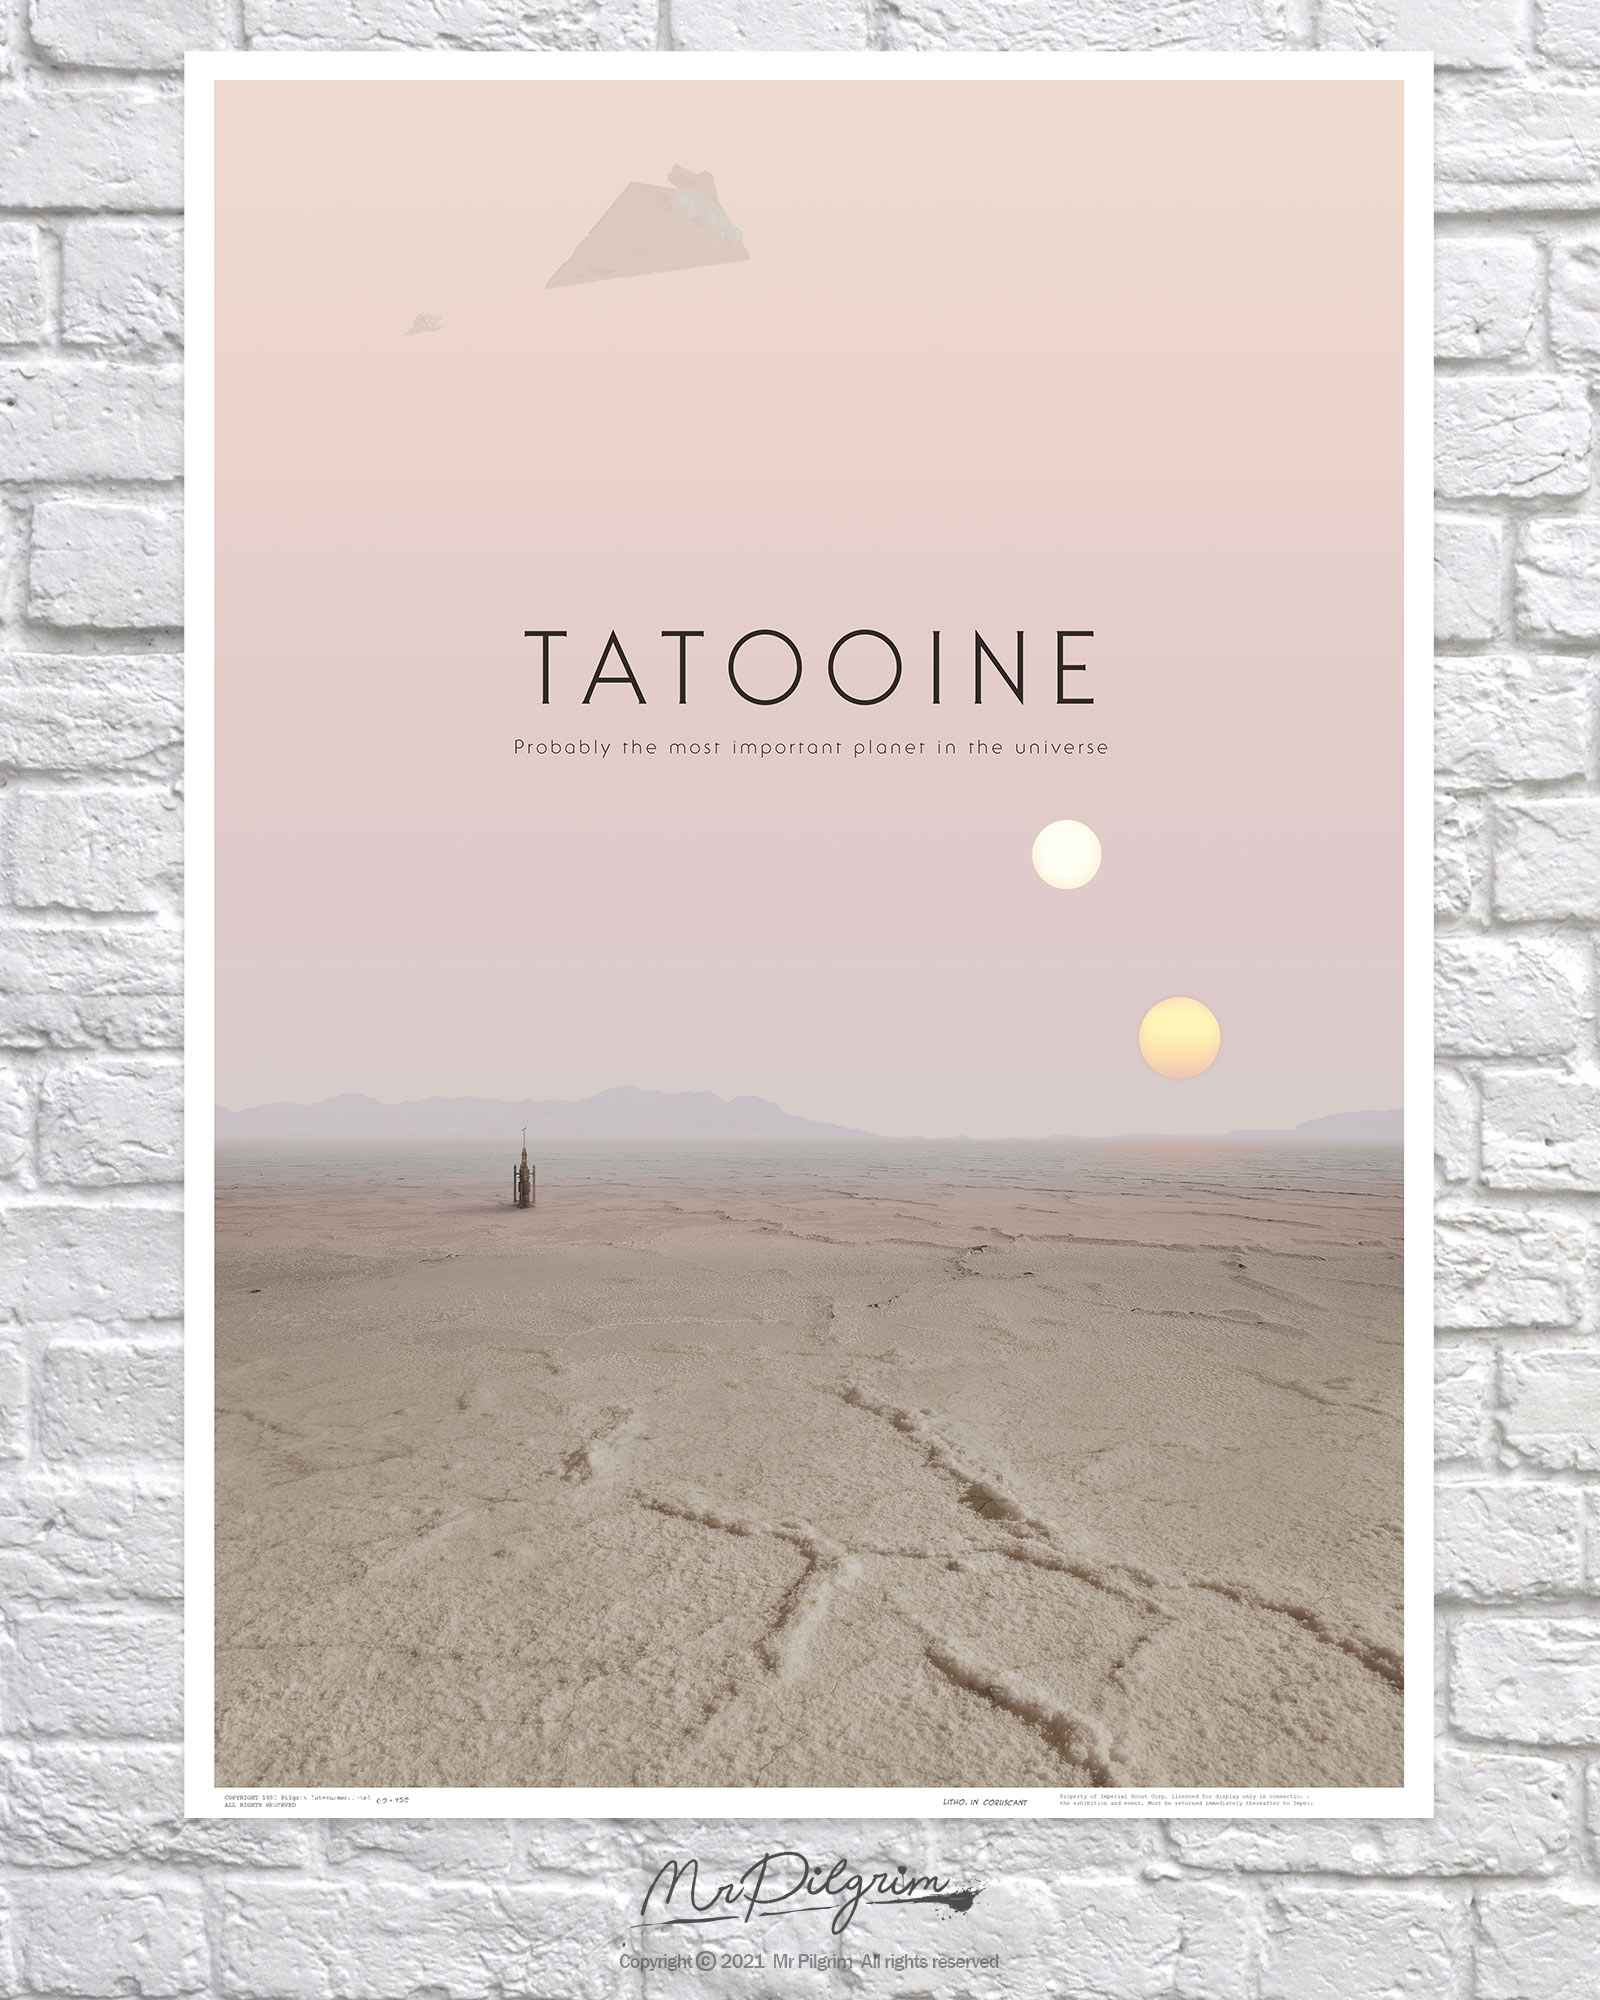 Star Wars Tatooine Poster!